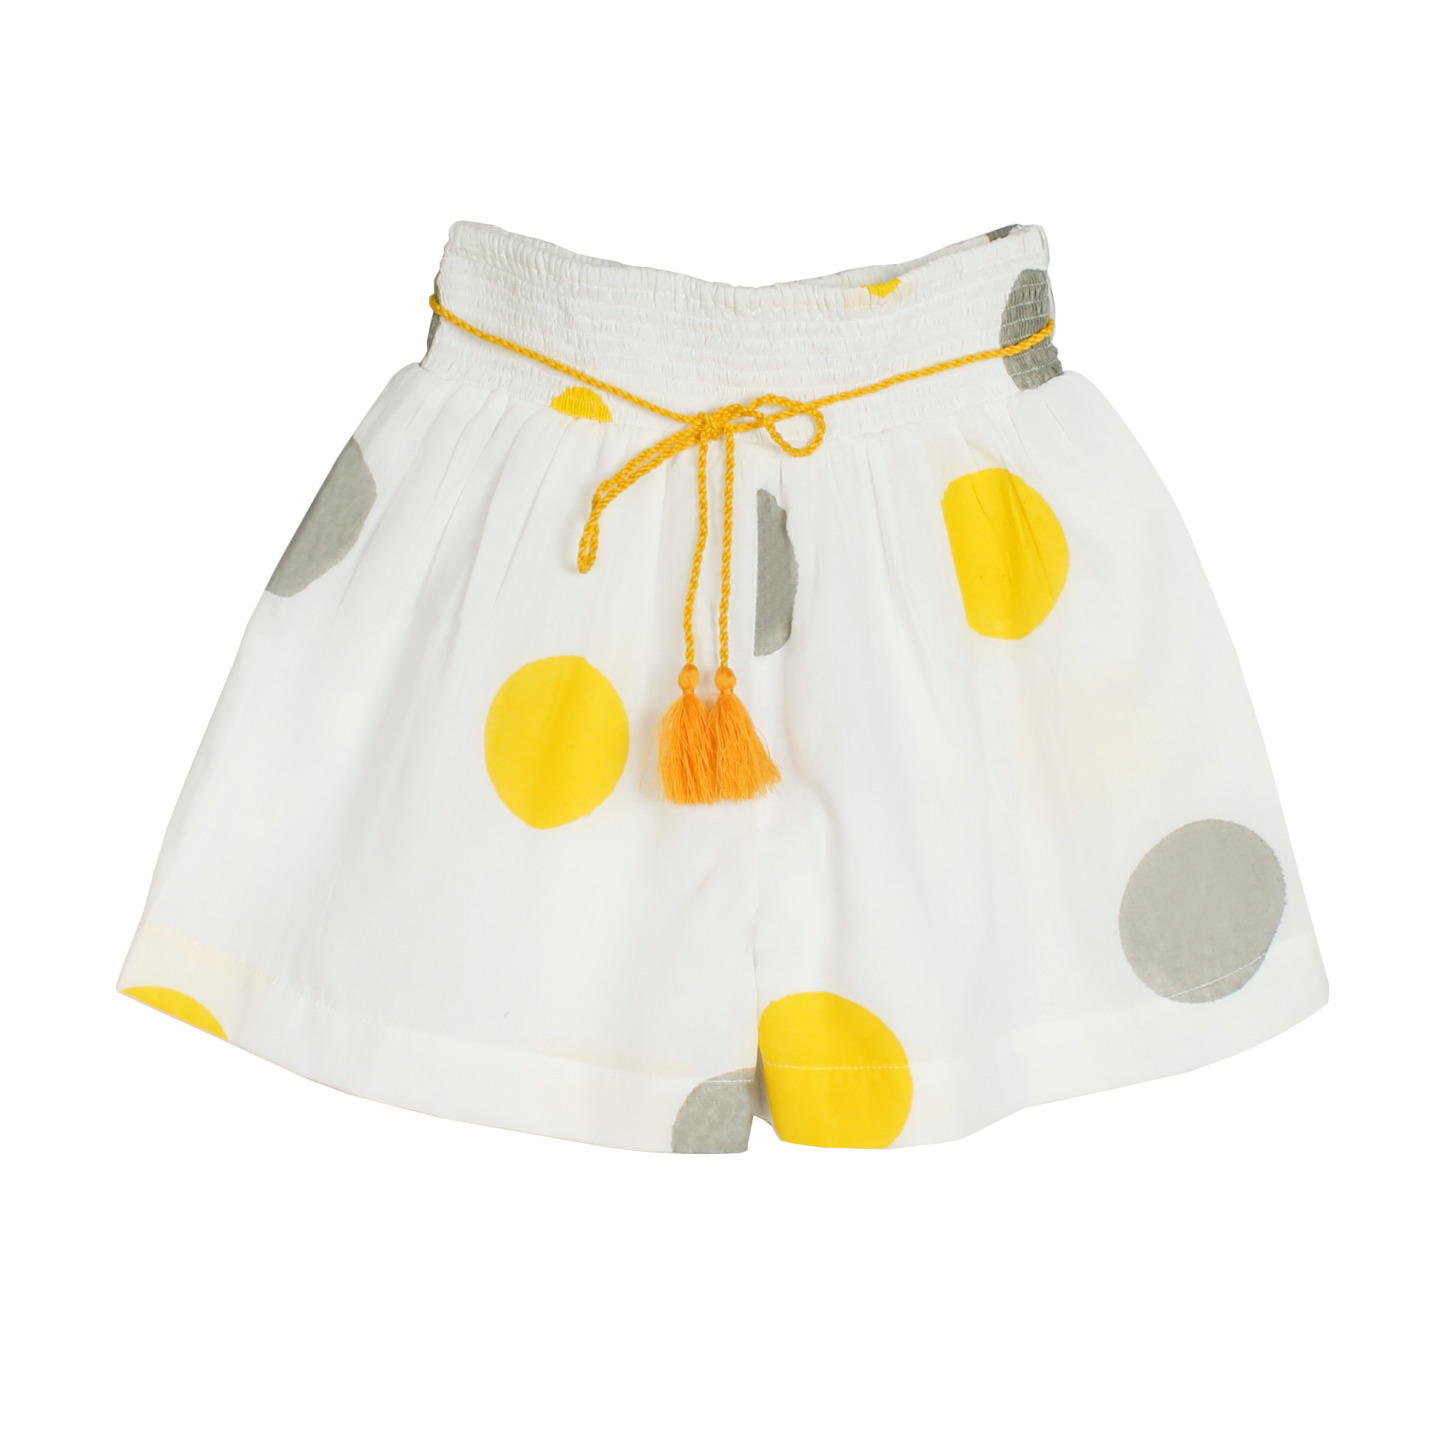 Anika polks shorts yellowgrey